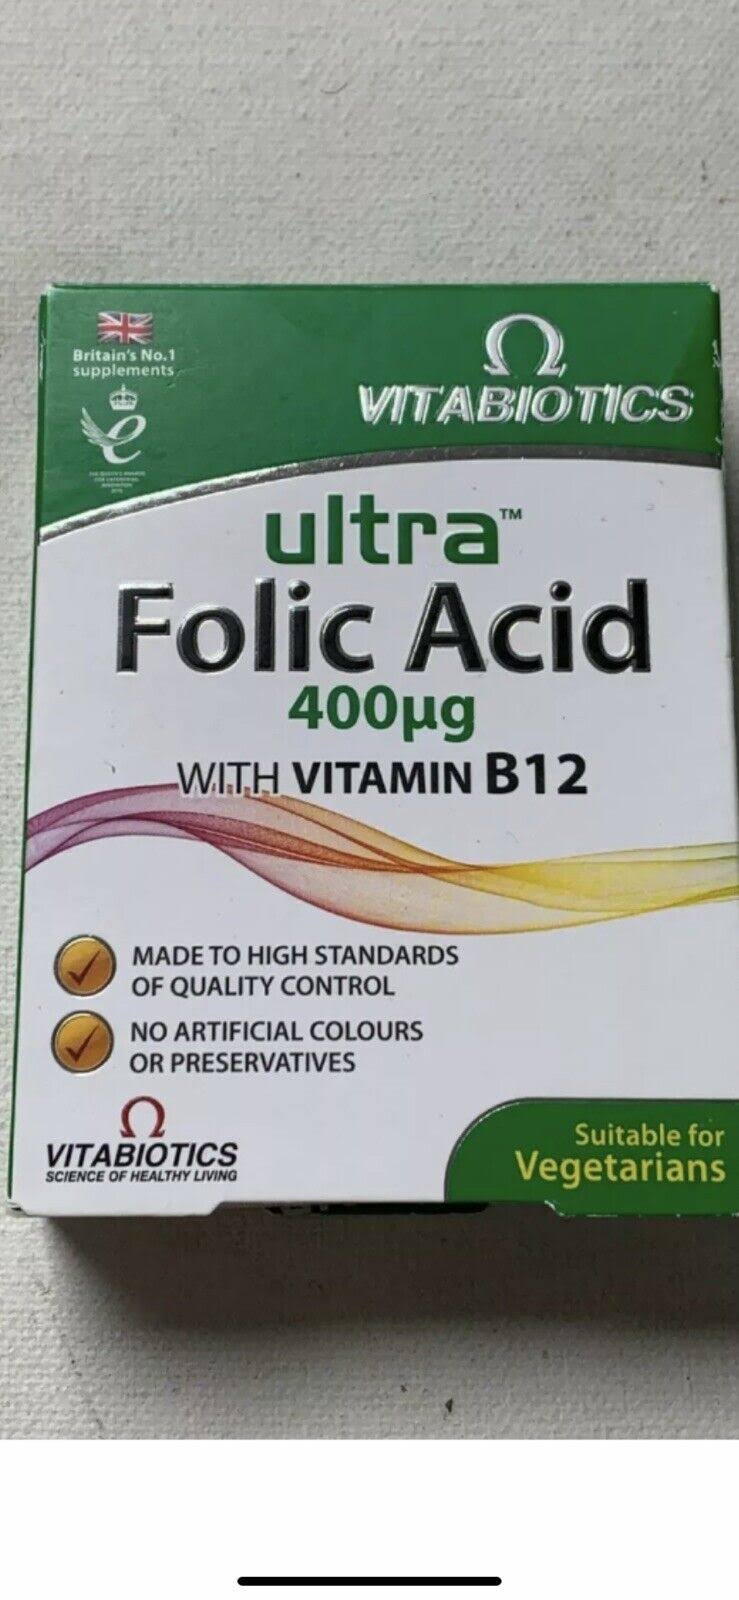 Vitabiotics Ultra Folic Acid Tablets - 60ct, 400mg